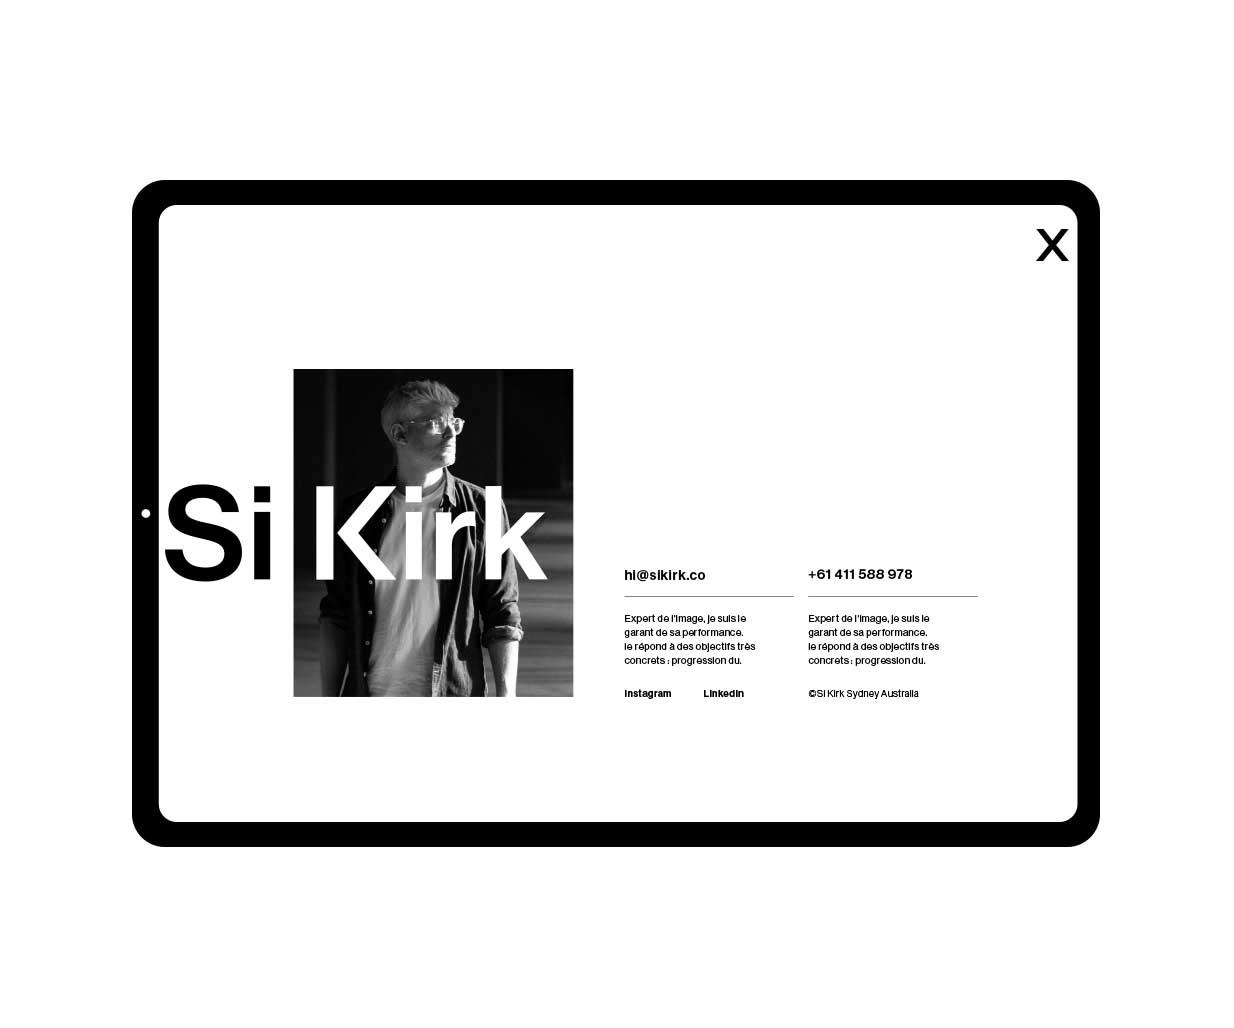 Sydney photographer Si Kirk engages the Percept design agency for digital branding, image H